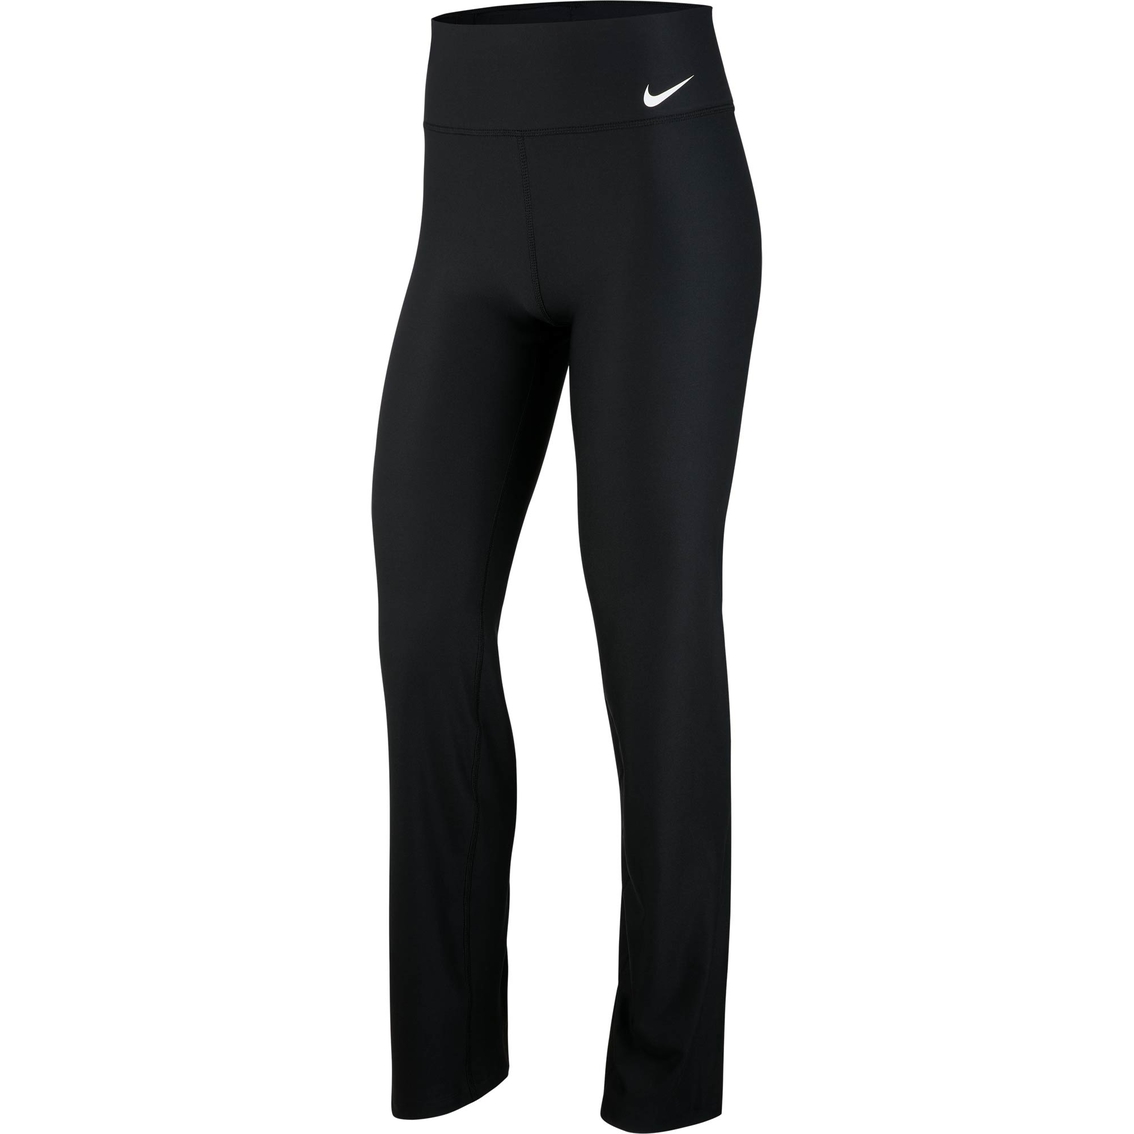 Nike Power Classic Gym Pants, Pants & Capris, Clothing & Accessories